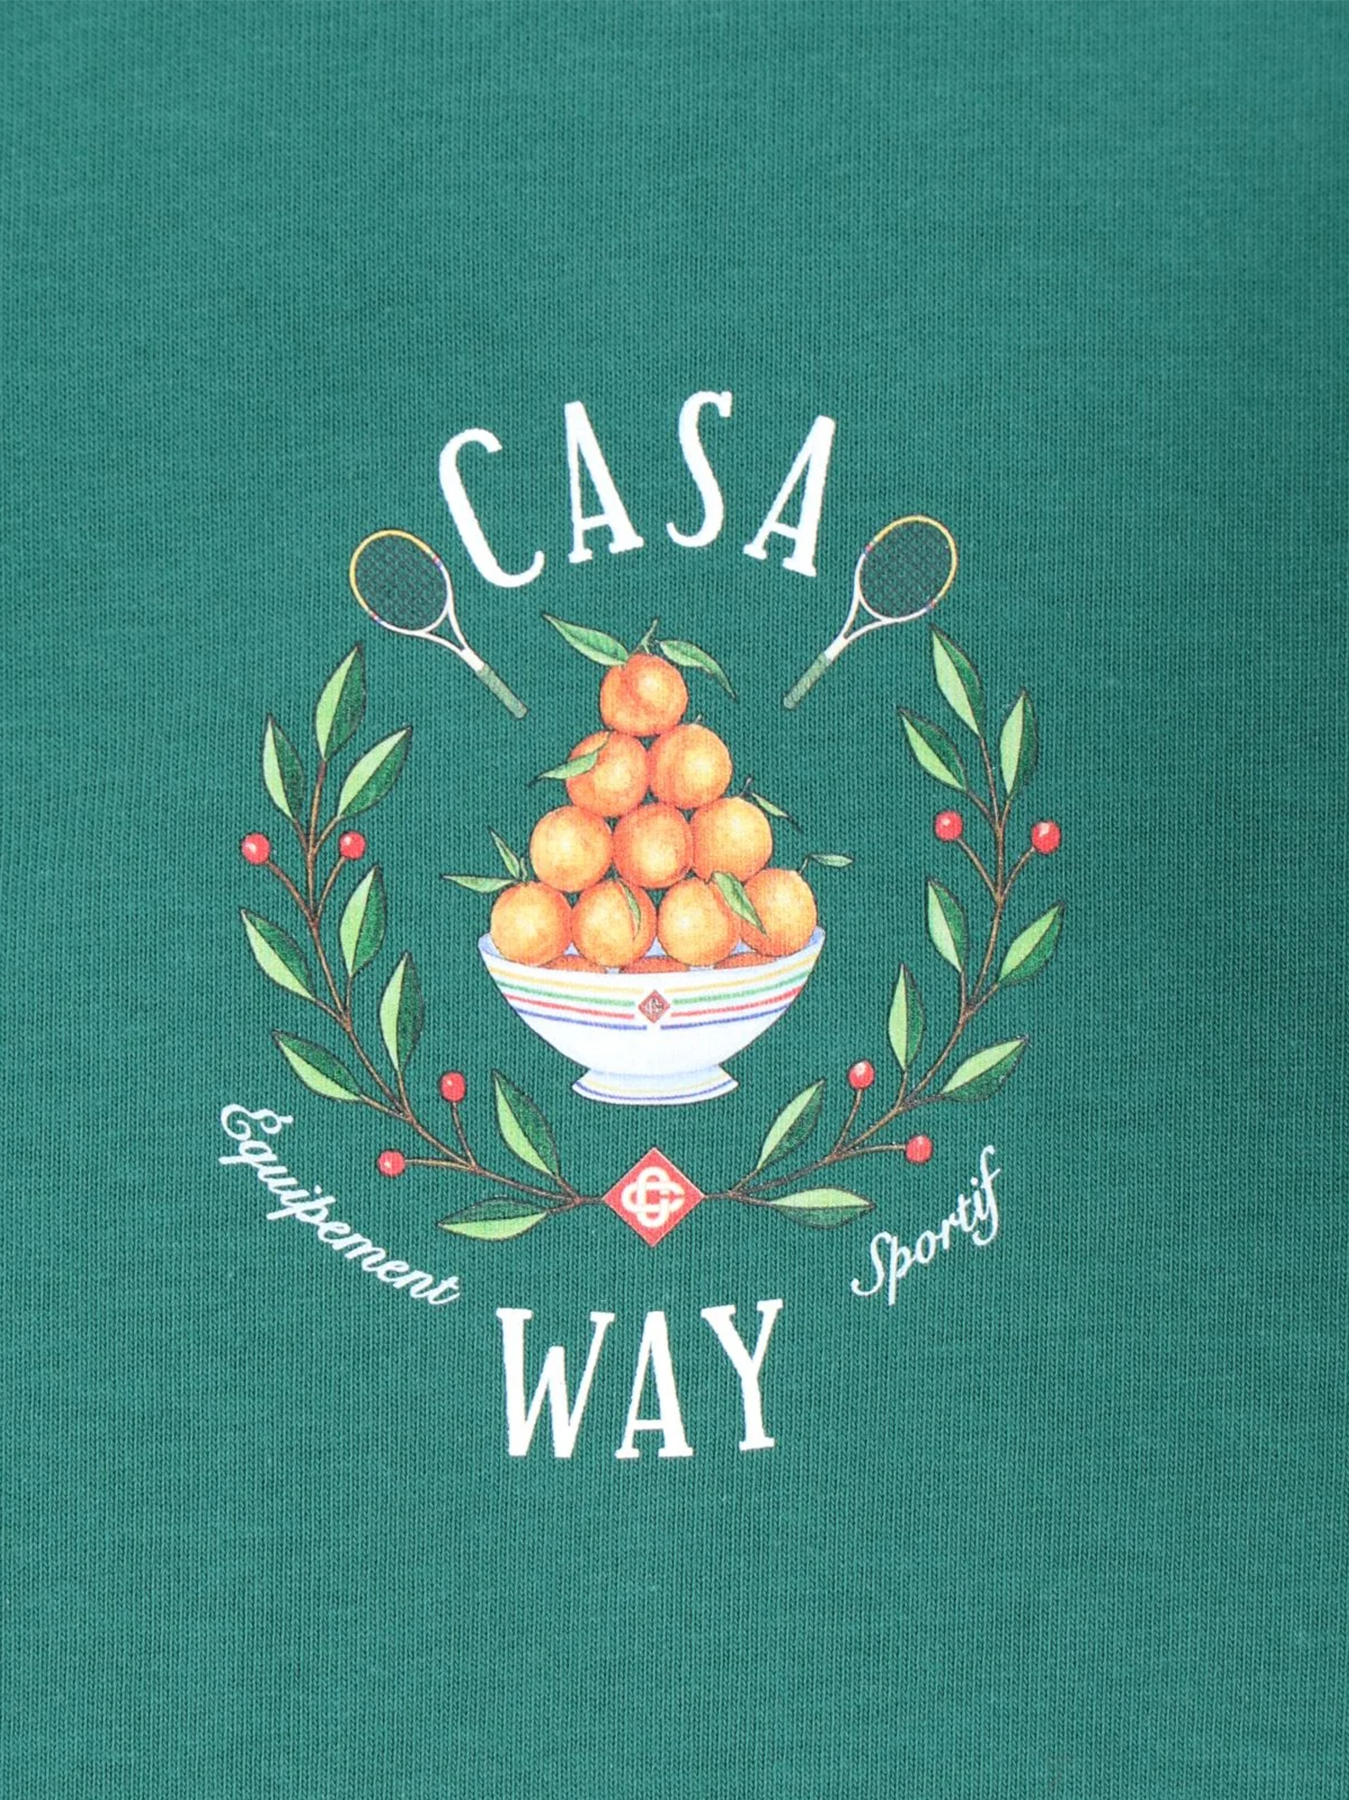 Casablanca Casa Way Bowl of Oranges Printed T-Shirt in Green